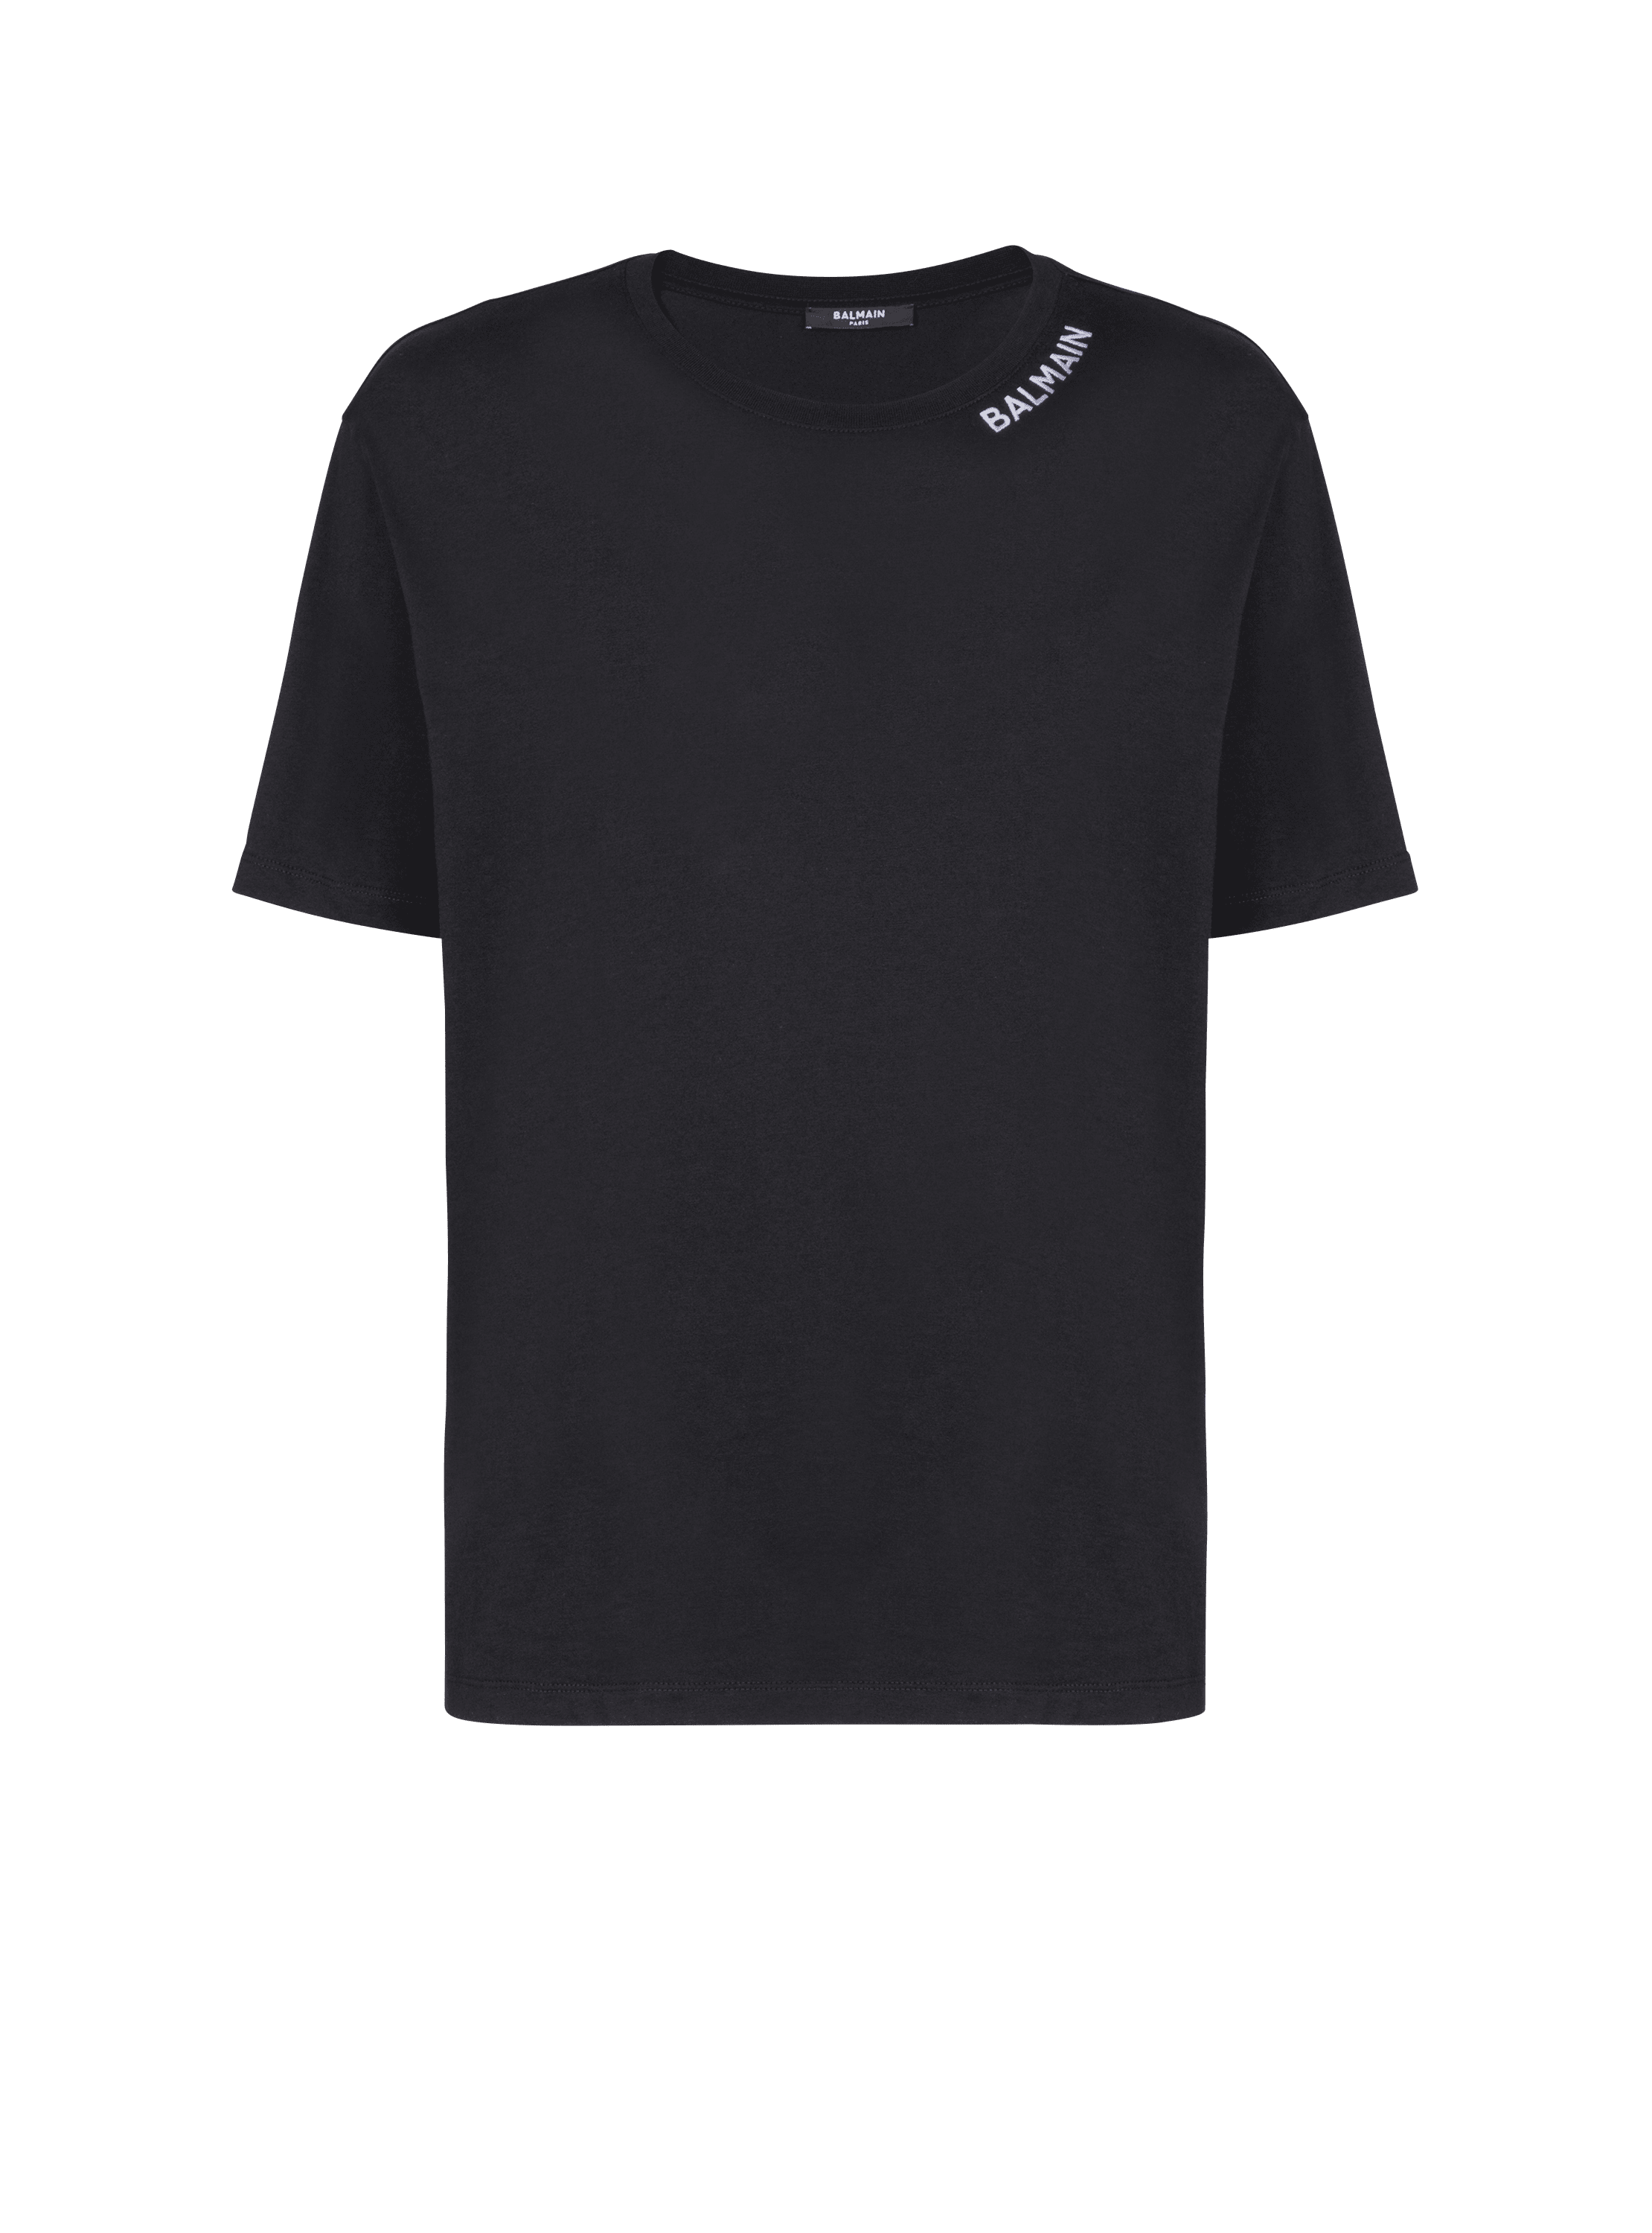 Balmain embroidered T-shirt, black, hi-res